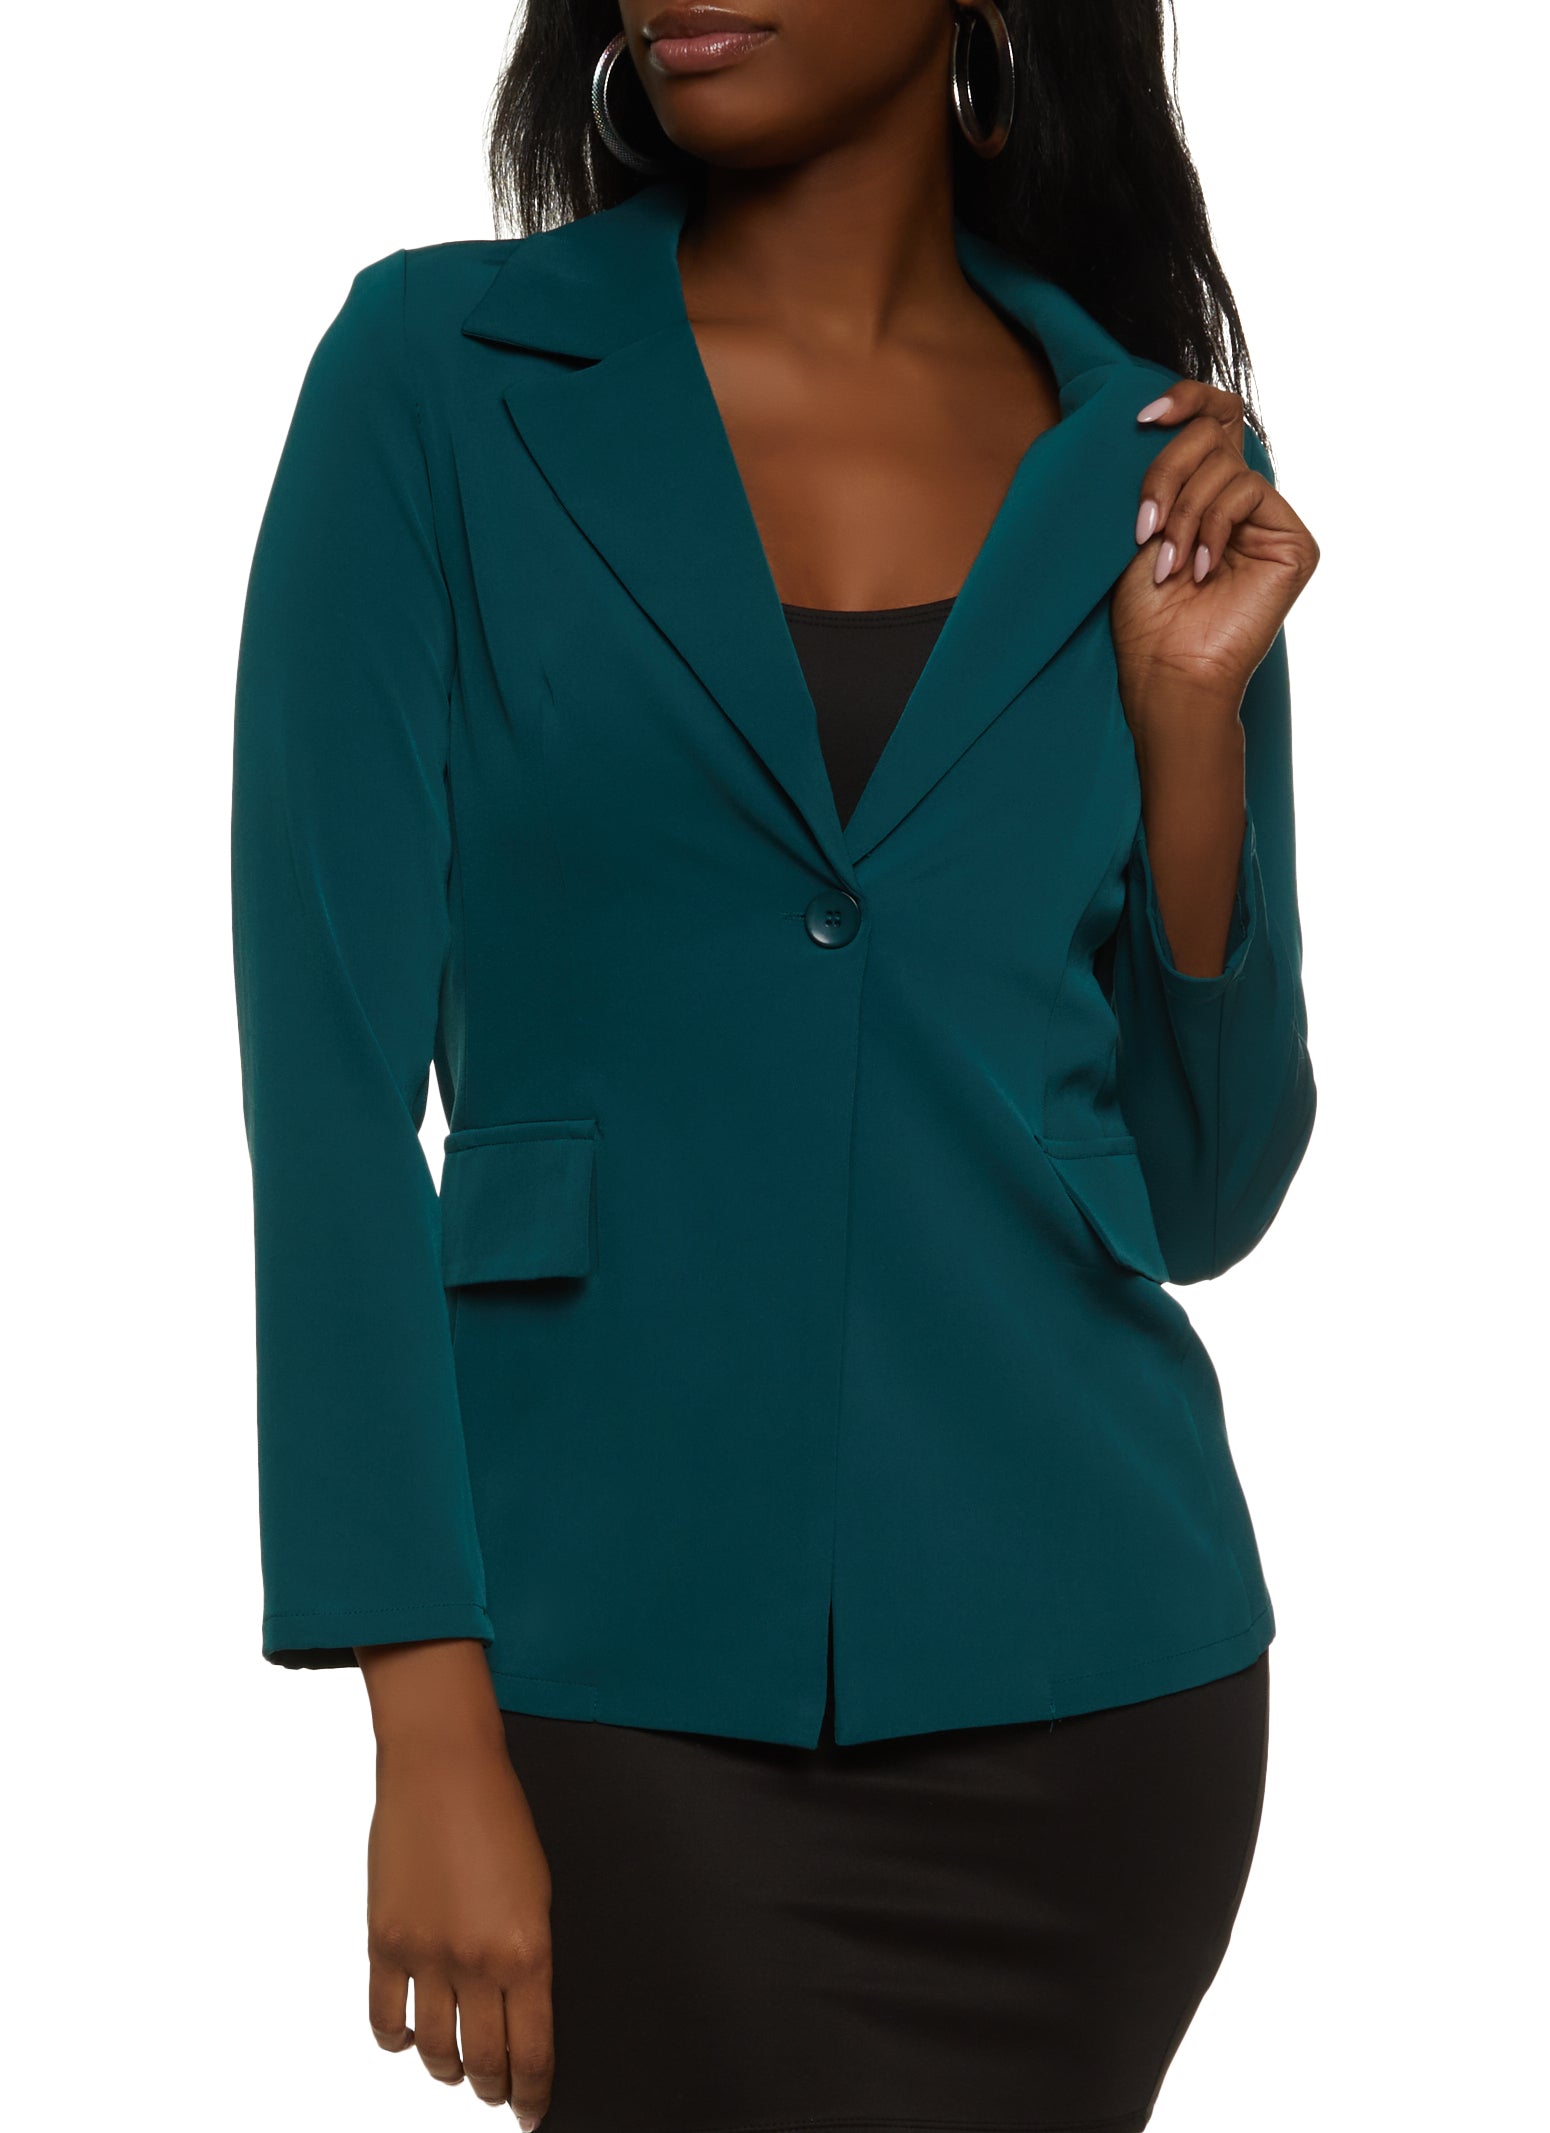 Womens Crepe Knit Basic One Button Blazer, Green, Size M